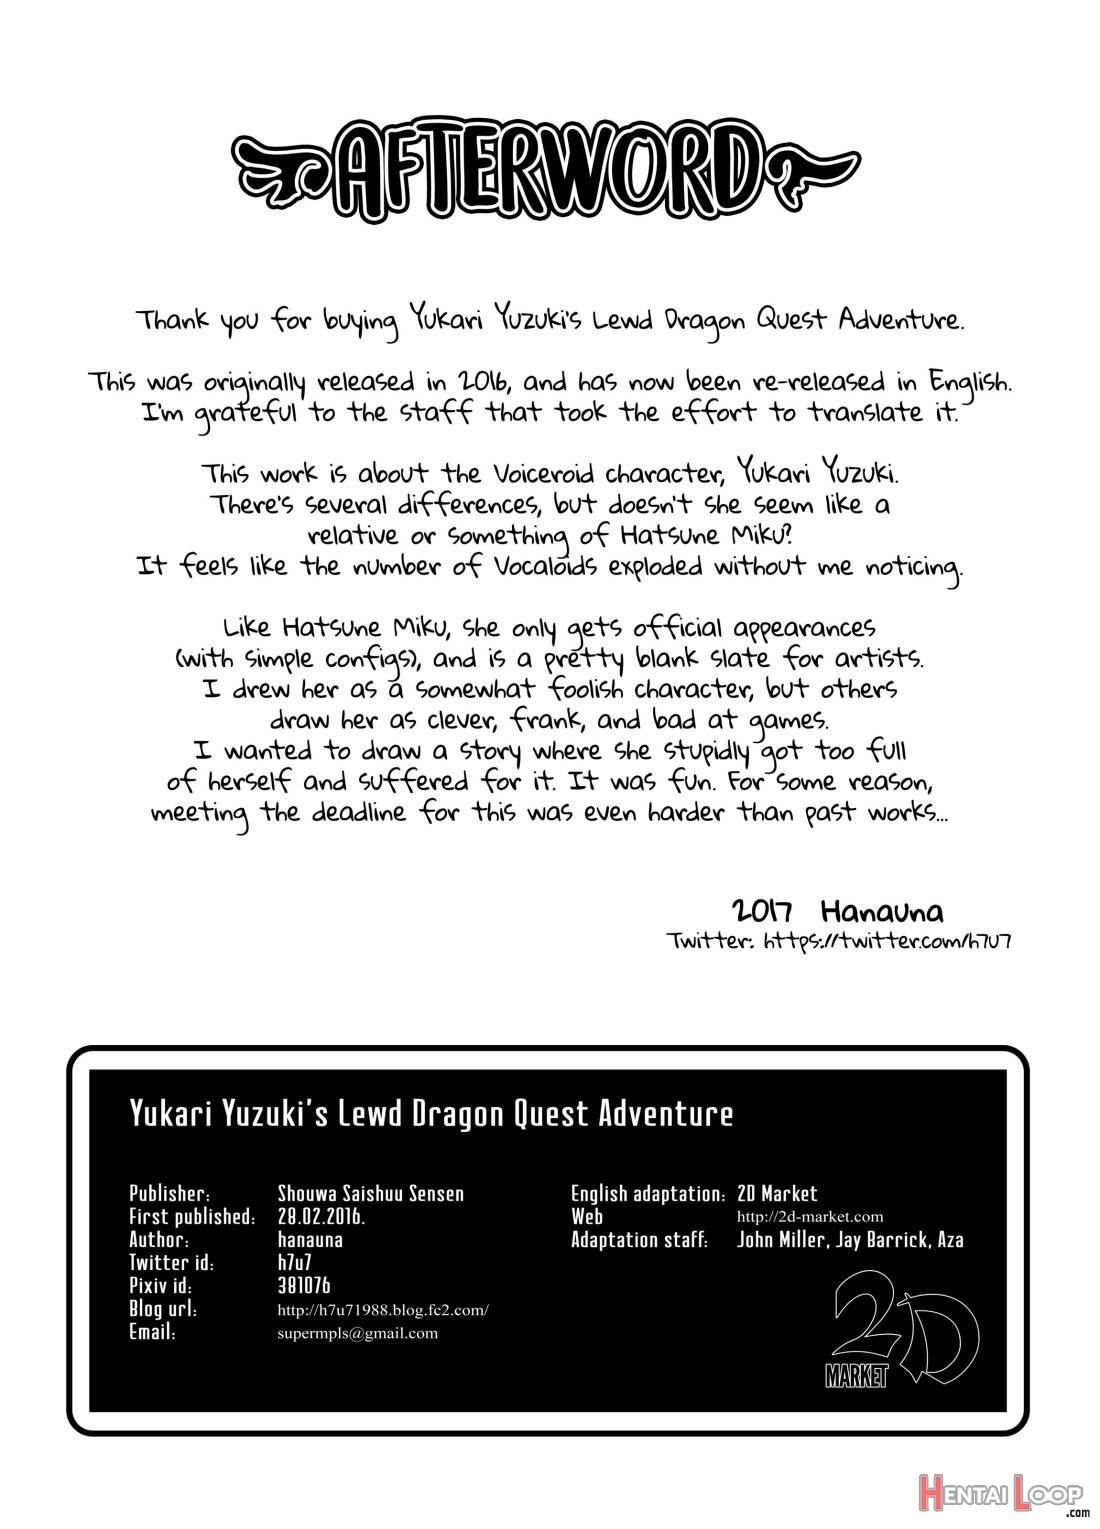 Yuzuki Yukari’s Lewd Dragon Quest Adventure page 23